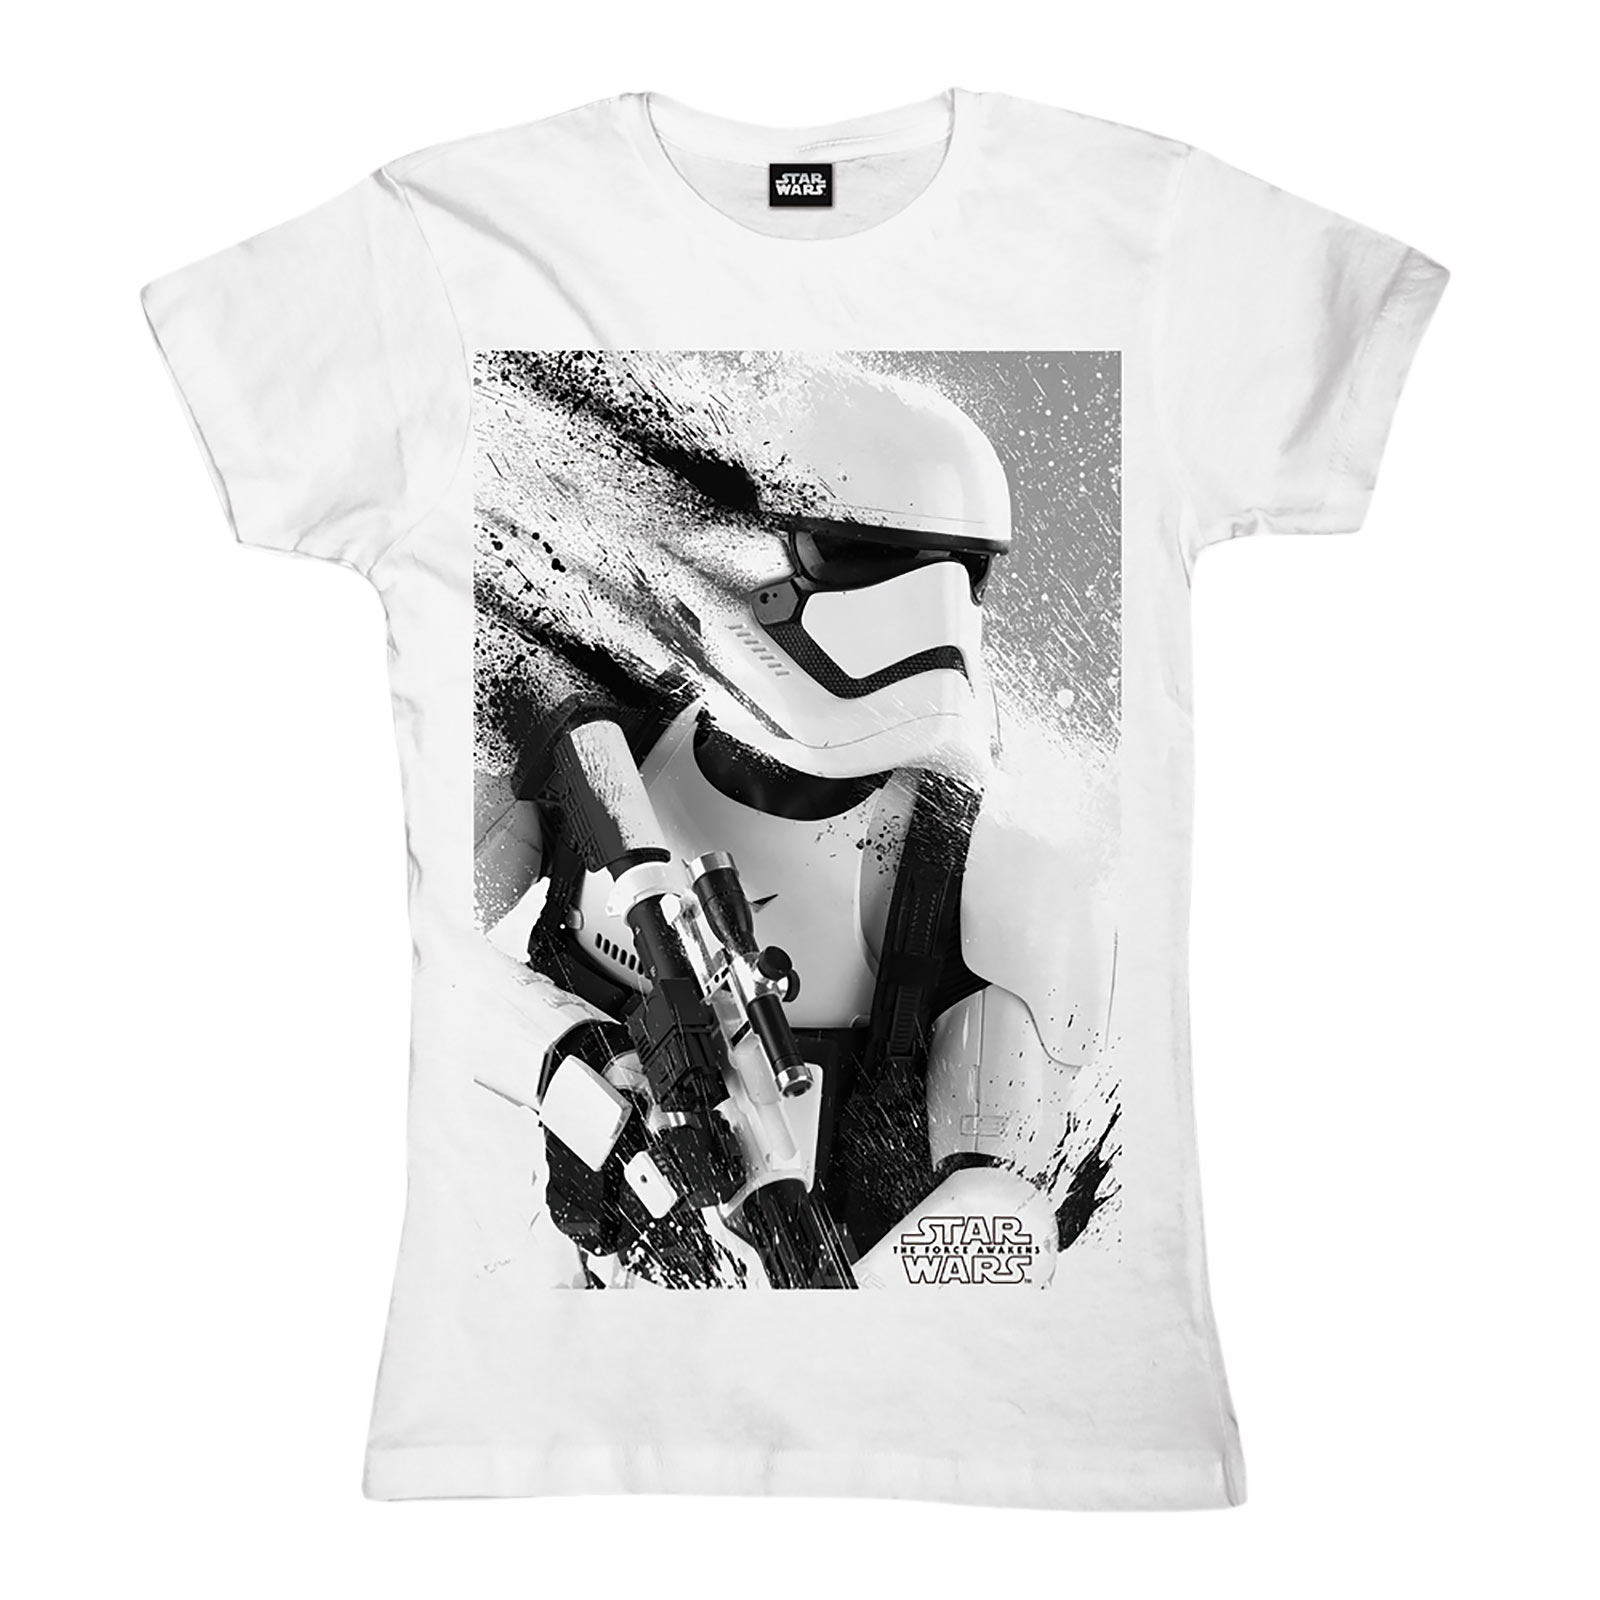 Star Wars - T-shirt fille Stormtrooper Splatter blanc